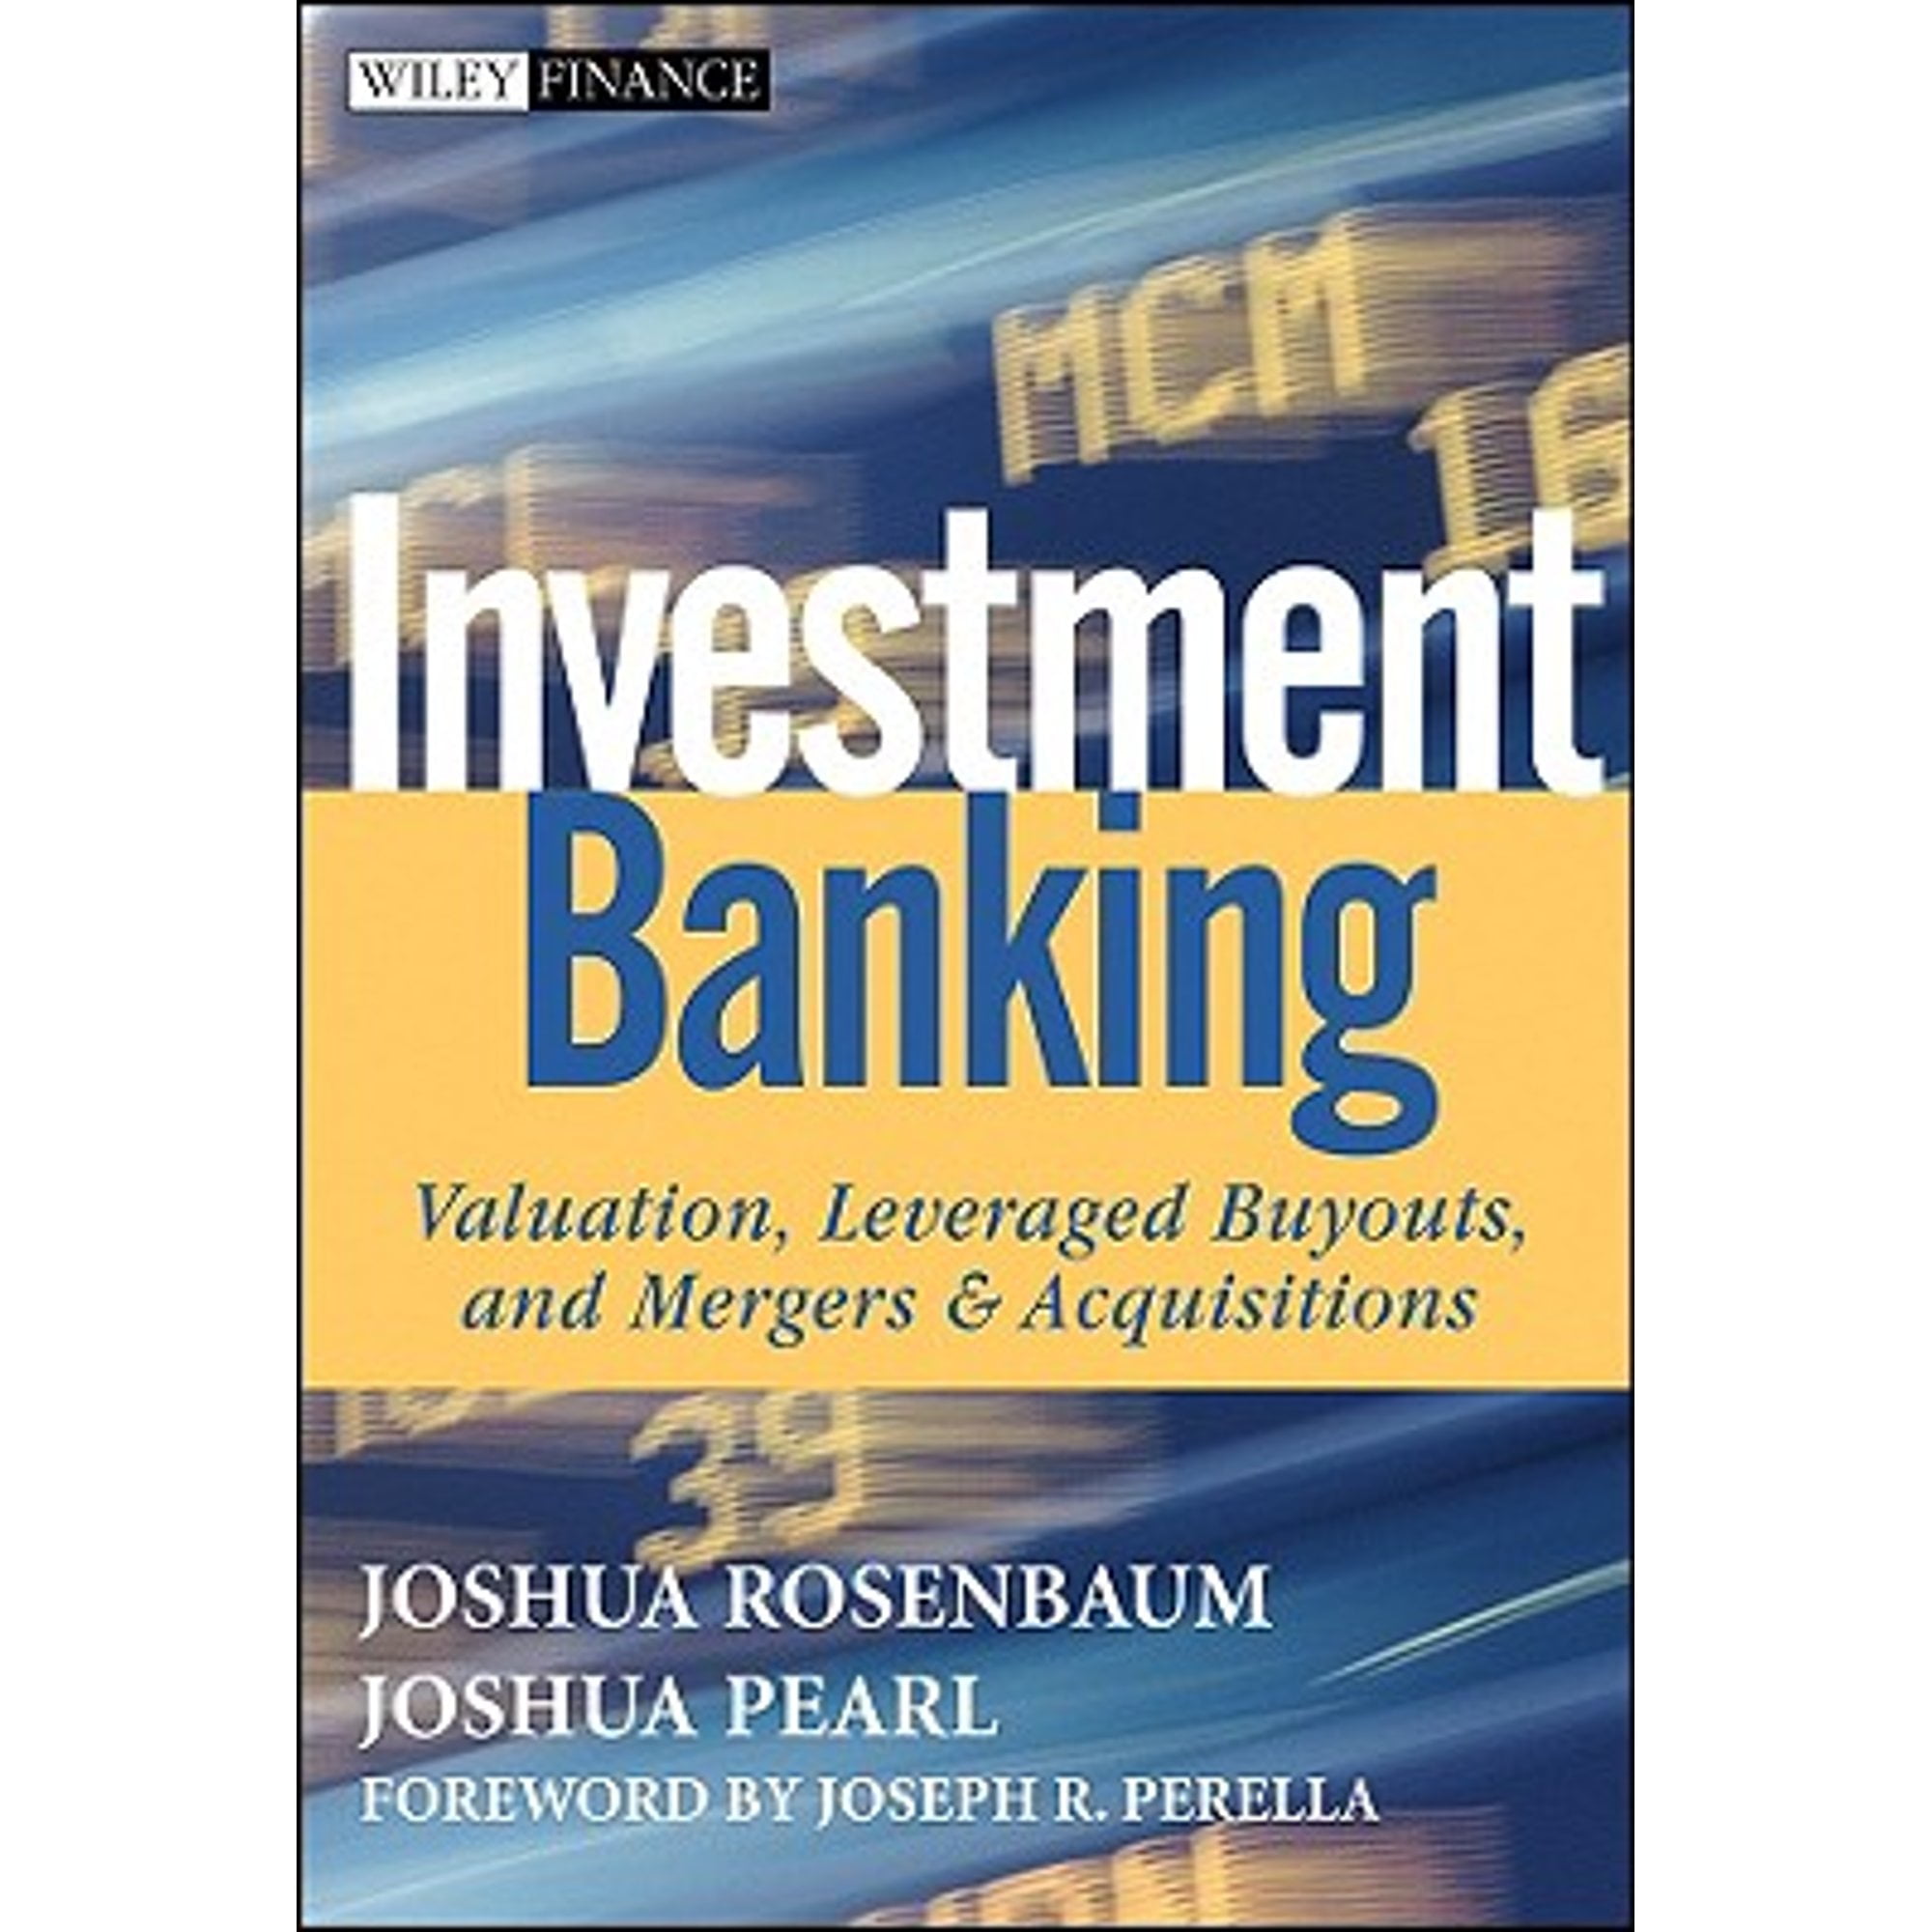 Banking book is. Joshua Rosenbaum investment Banking. Investment Banking Workbook. Инвестиции в банк книга. Инвестиций as book Cover.